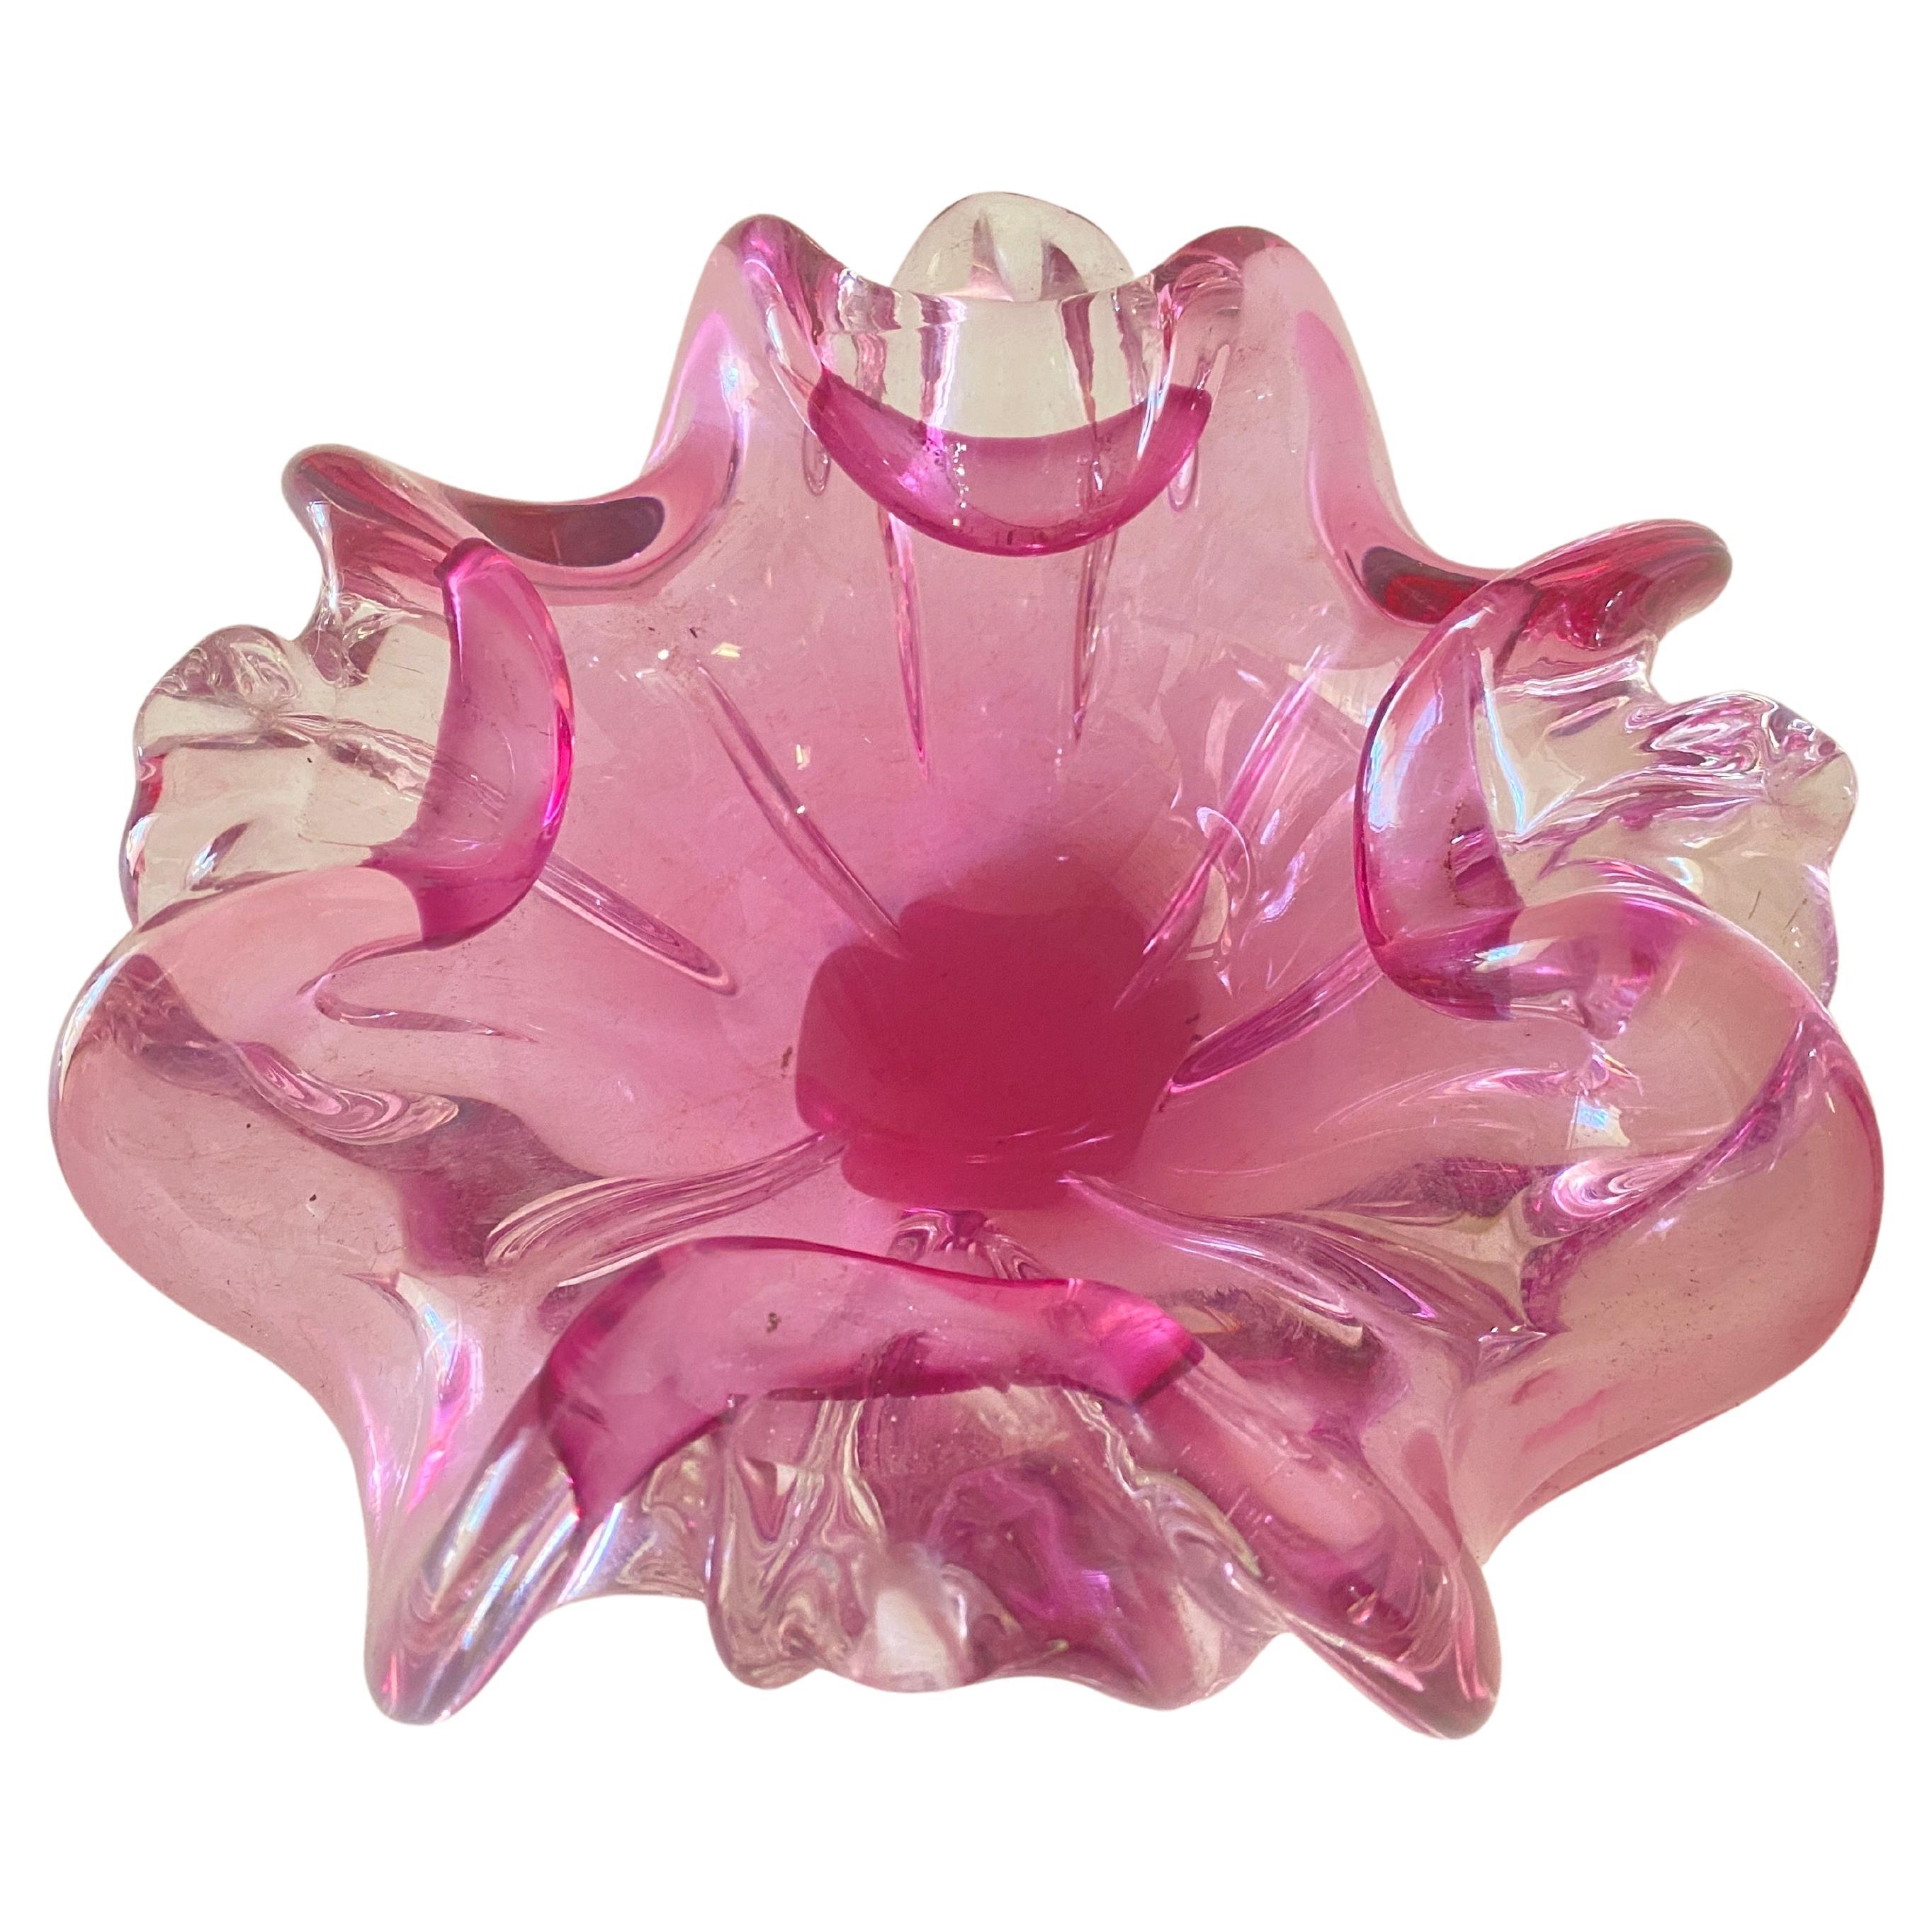 Vide Poche or Ashtray in  Art Glass Venice Pink Color Italy Murano 1970  For Sale